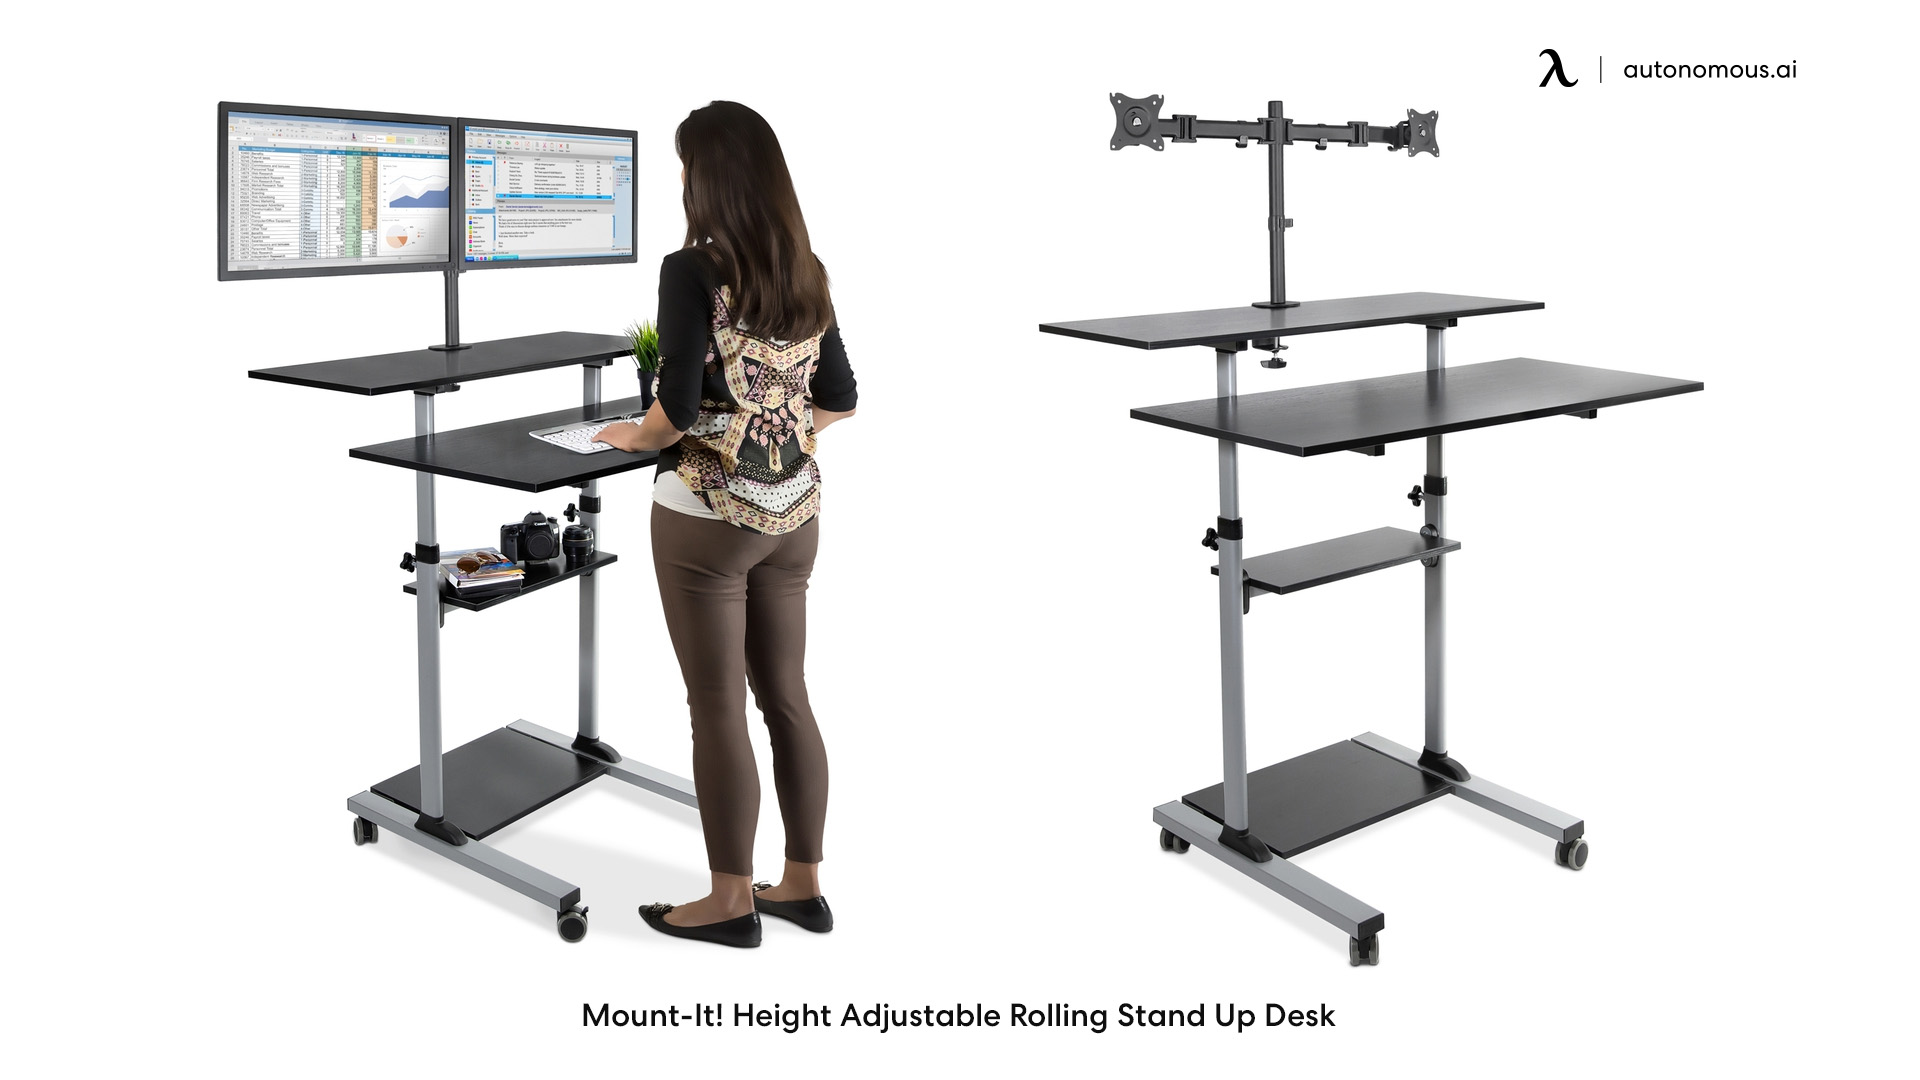 Mount-It! Height Adjustable Rolling Desk